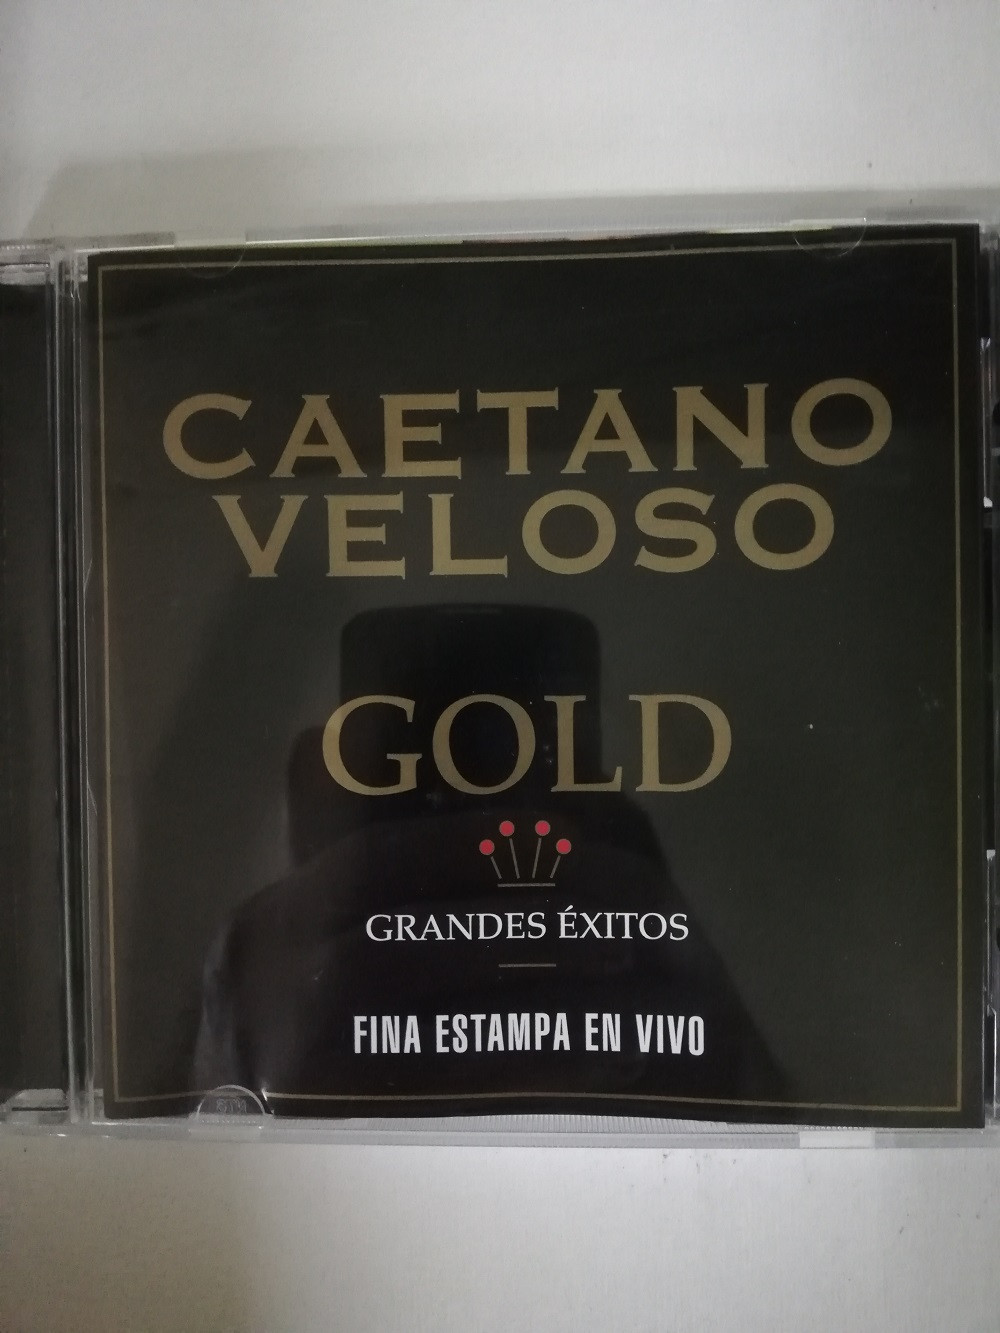 Imagen CD CAETANO VELOSO - GRANDES EXITOS